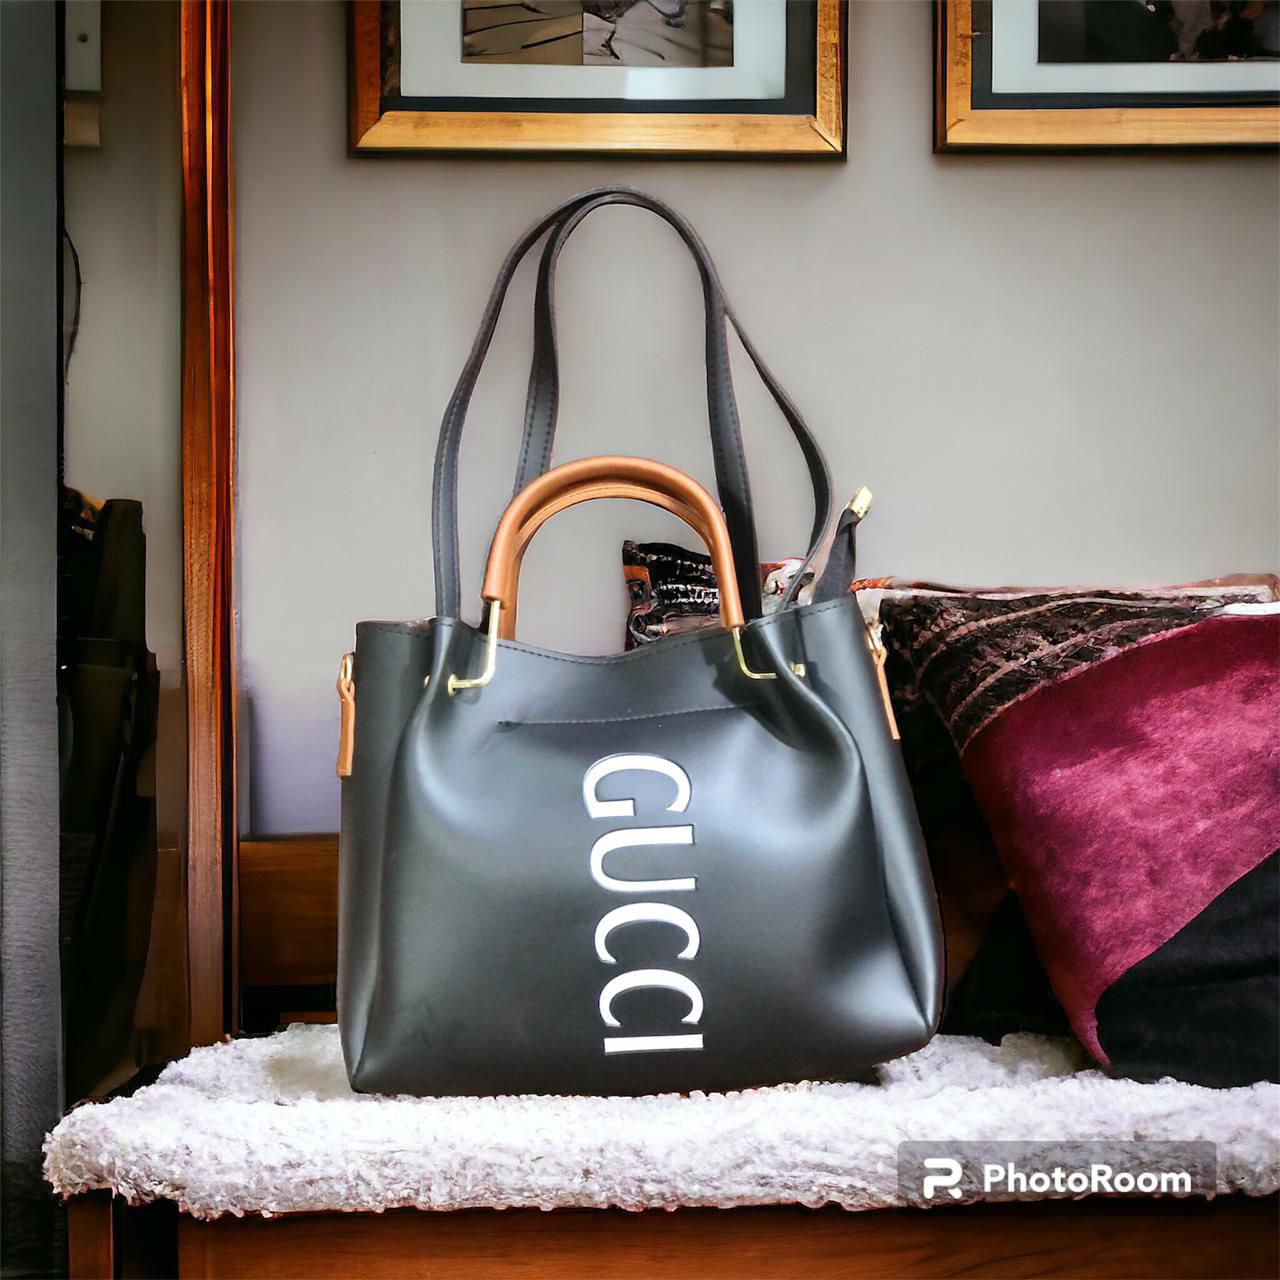 Gucci (GG) Handbags Best Price in Pakistan | Wishlistpk.com